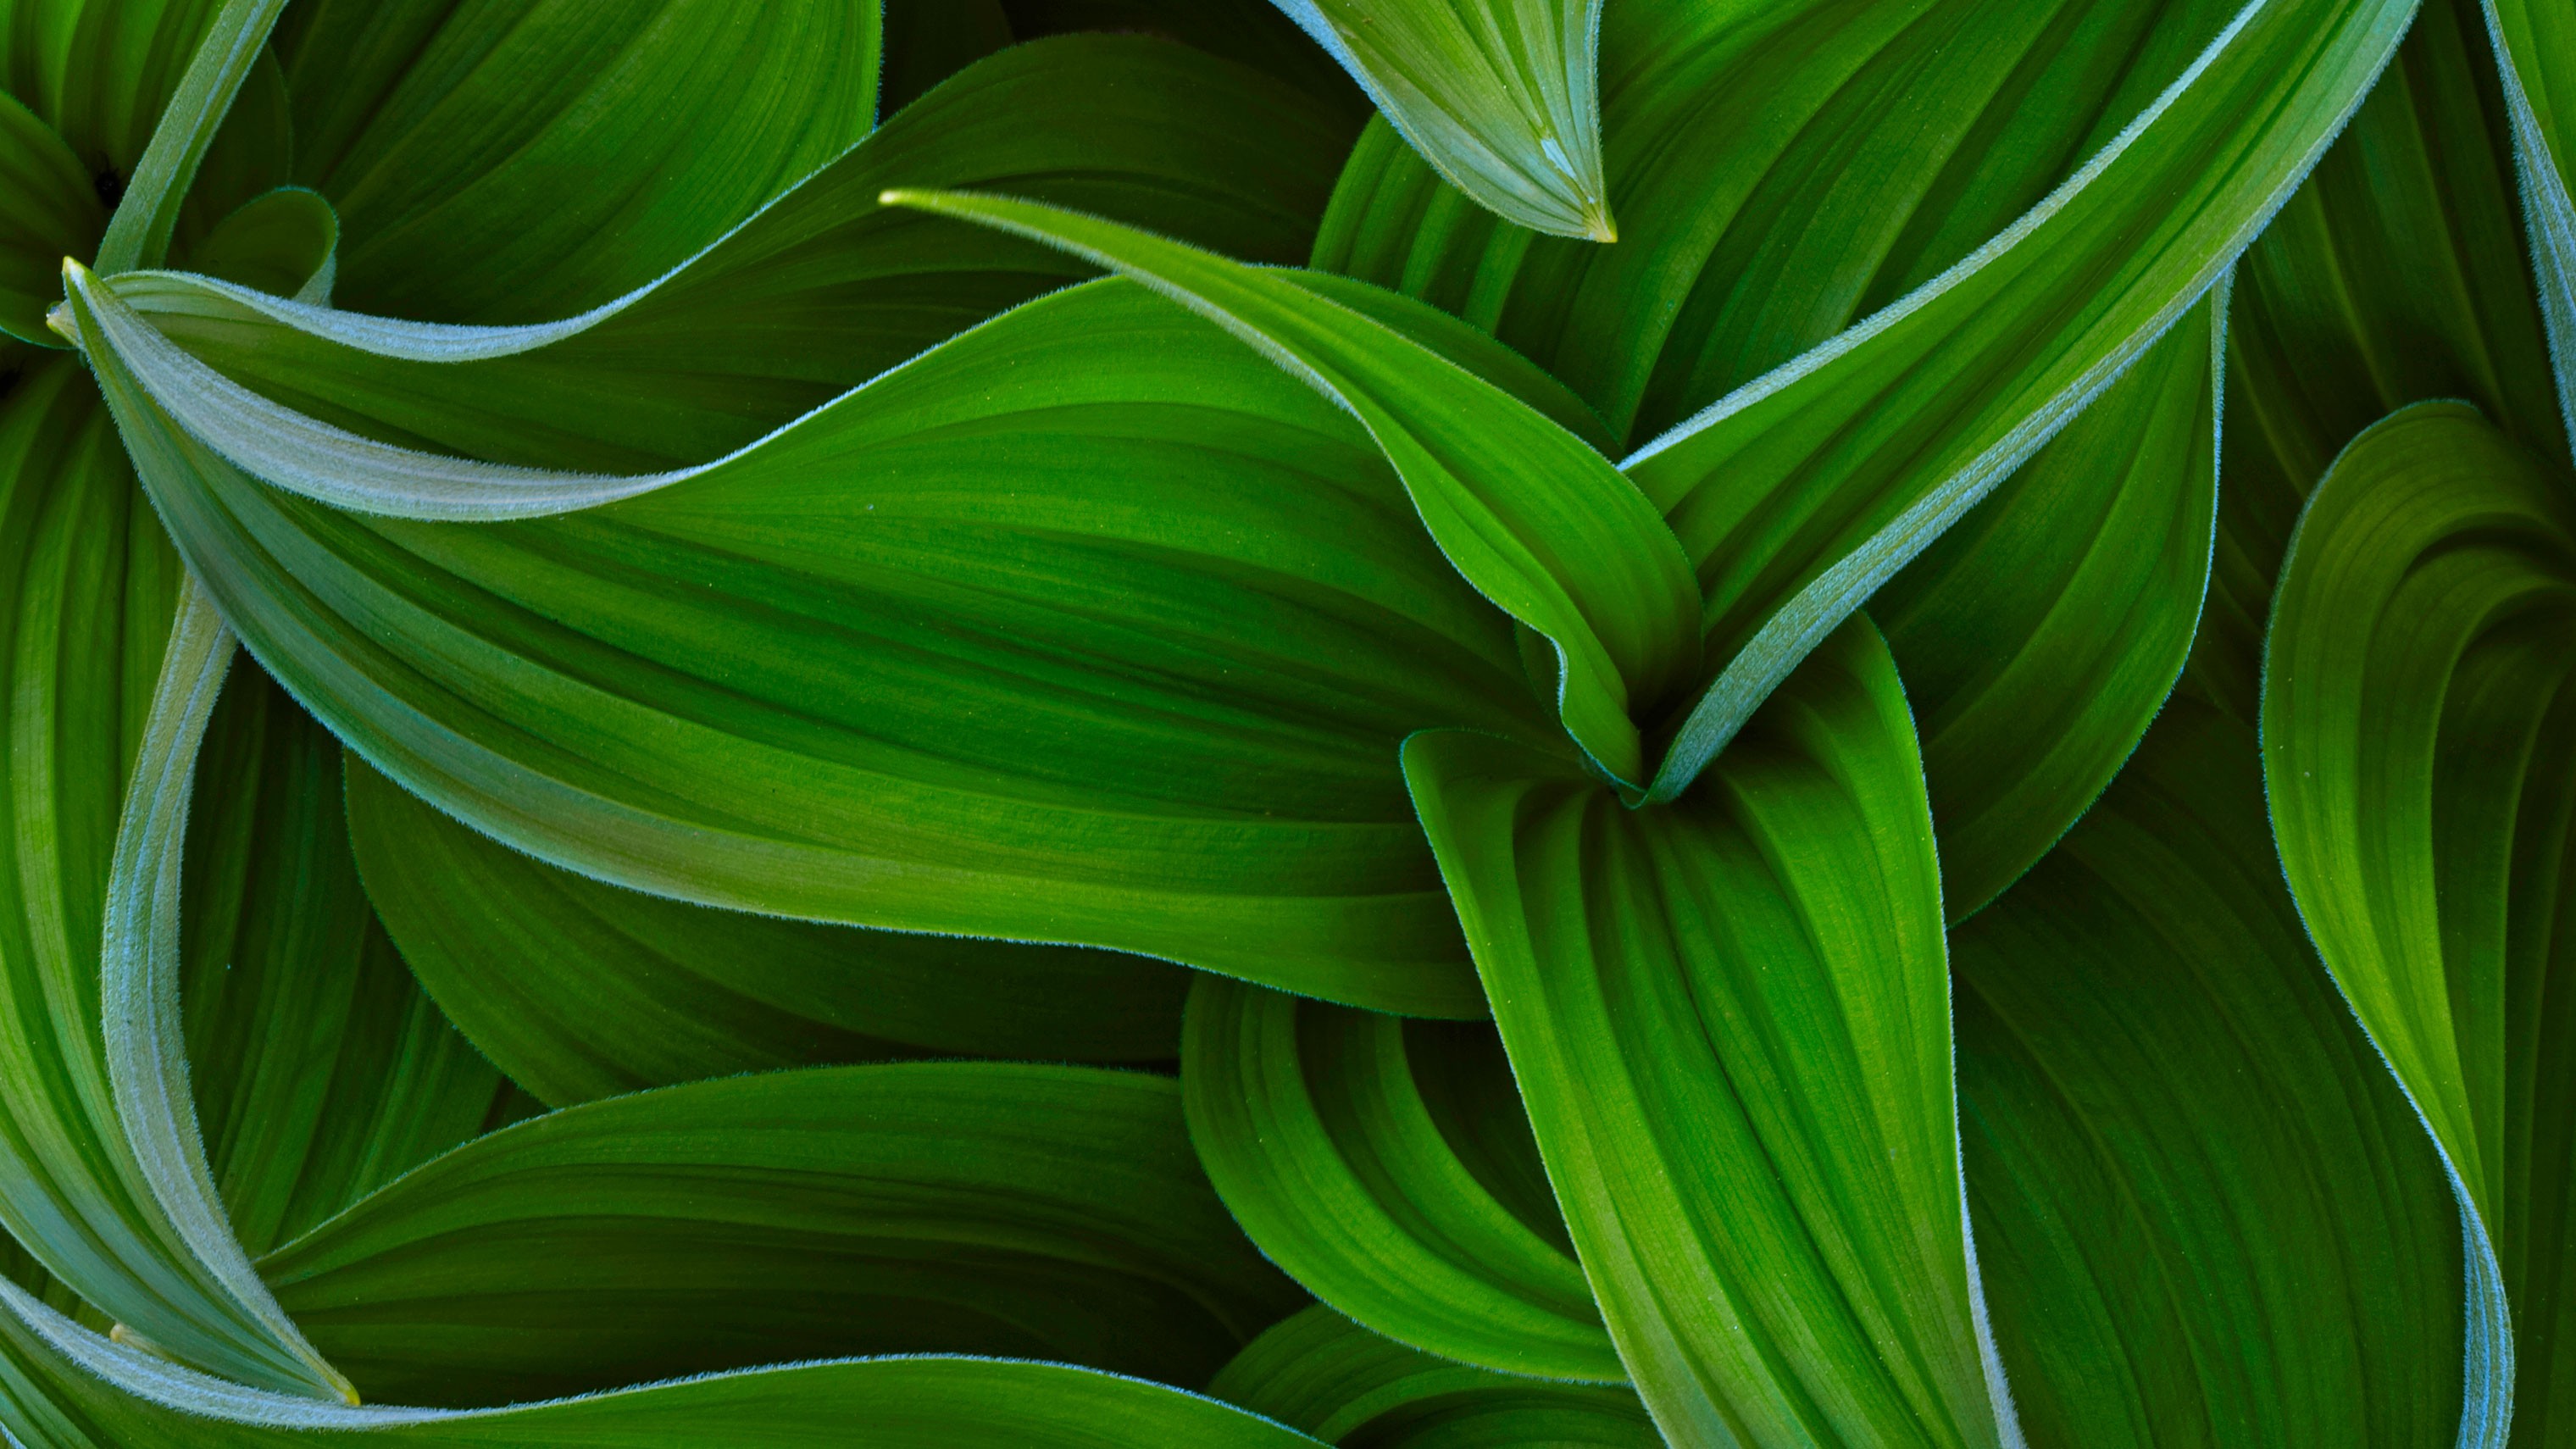 plants Wallpaper